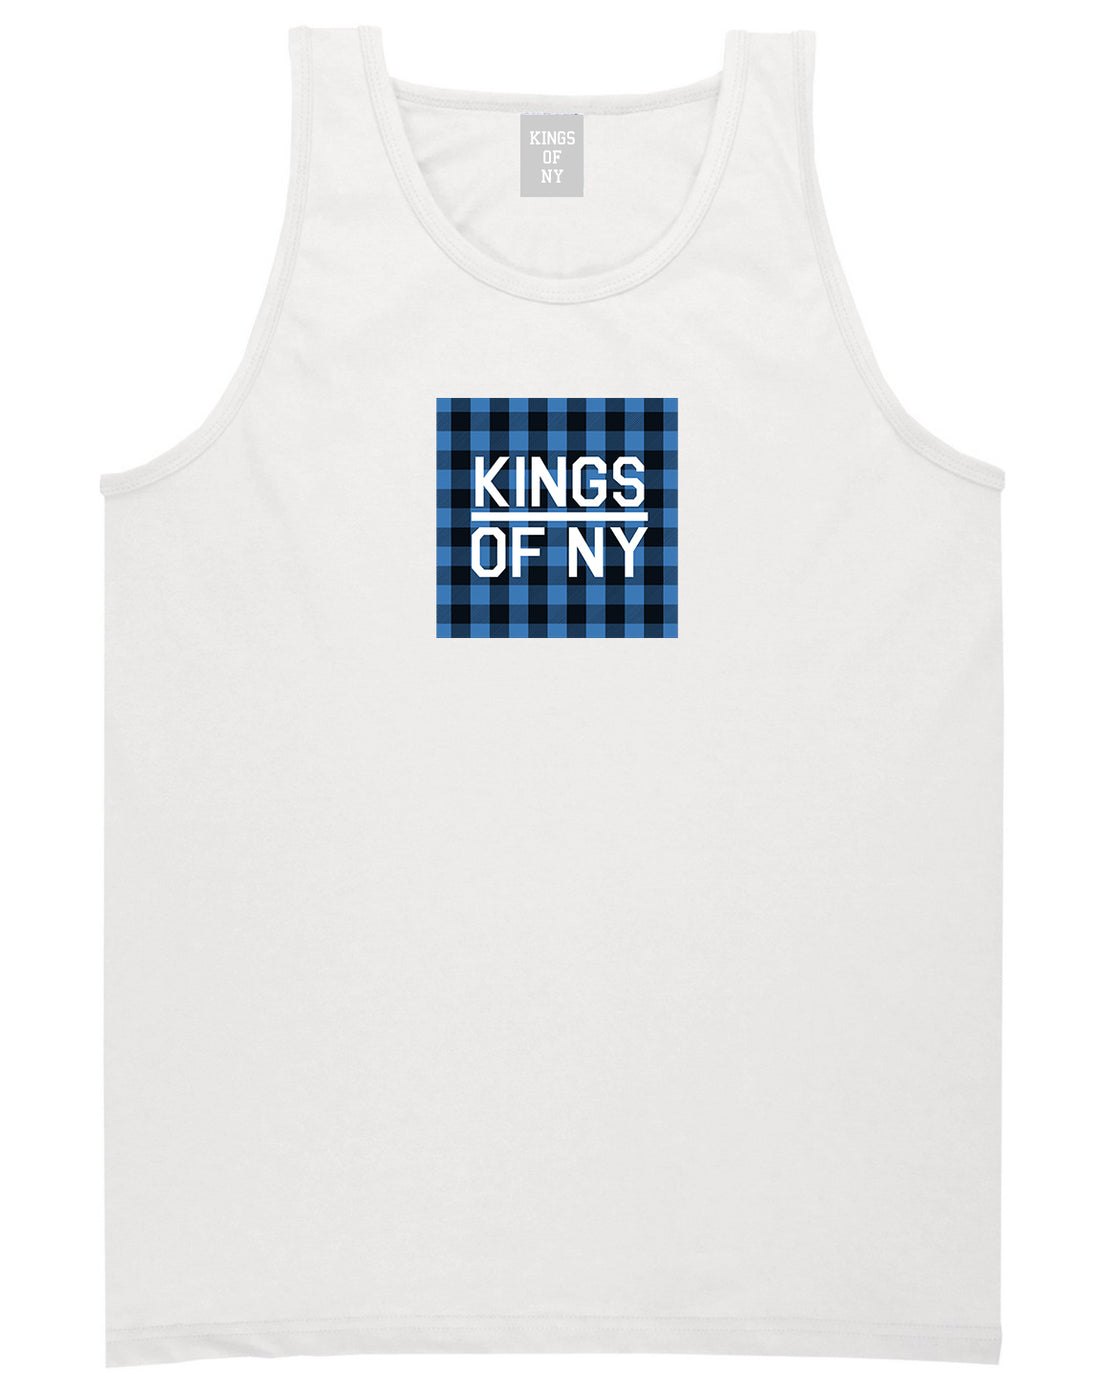 Blue Buffalo Plaid Box Logo Mens Tank Top Shirt White by Kings Of NY